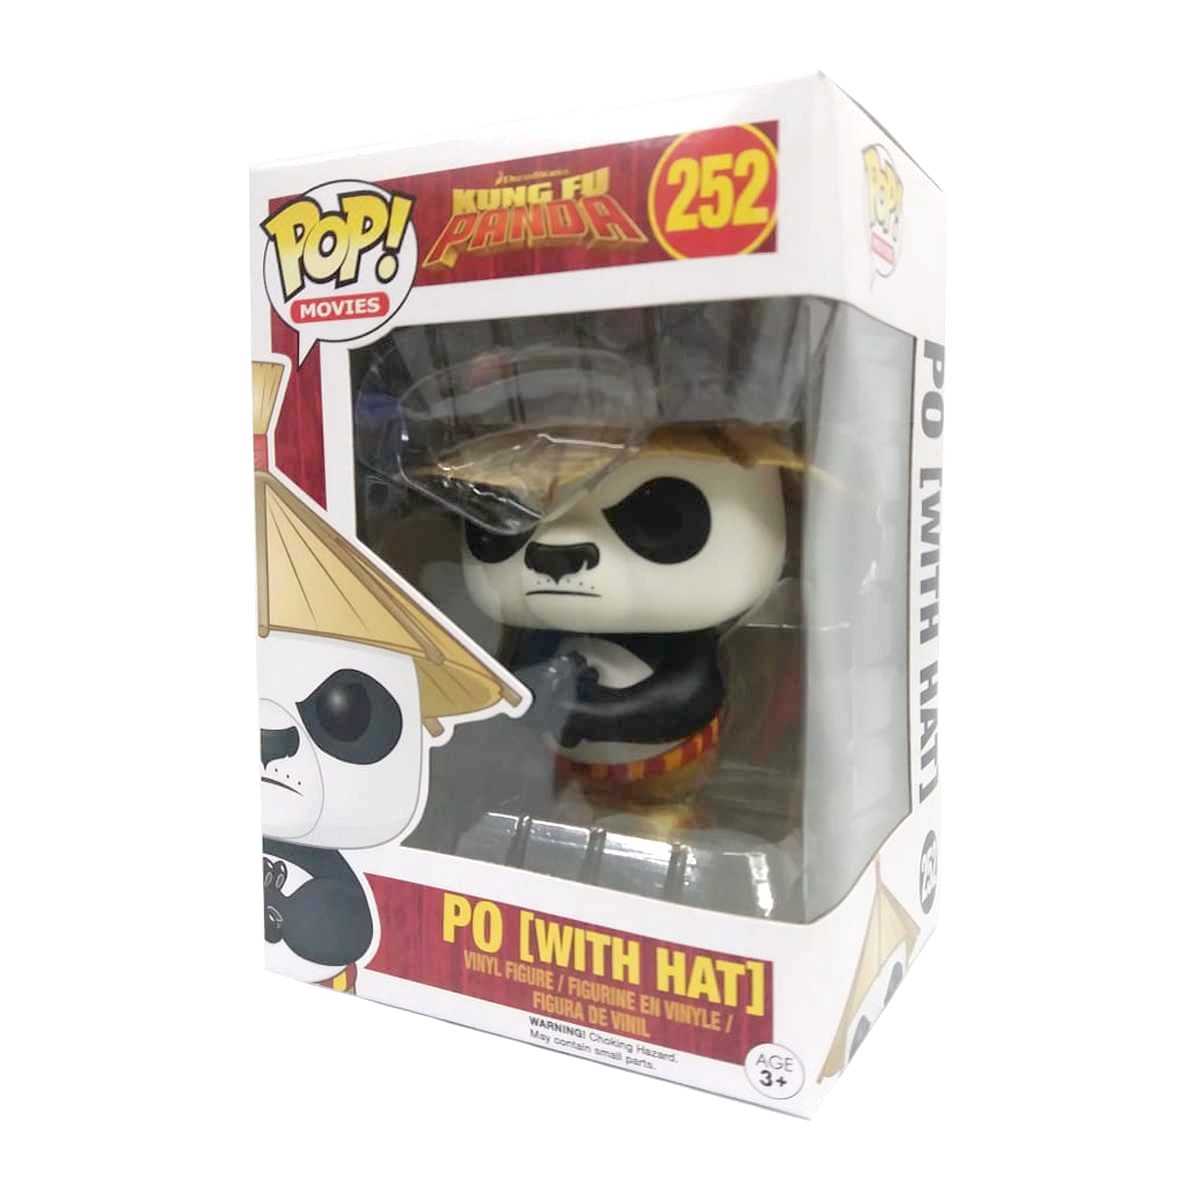 Funko Pop! Animation Kung Fu Panda Po with Hat (PO com chapéu) vinyl figure número 252